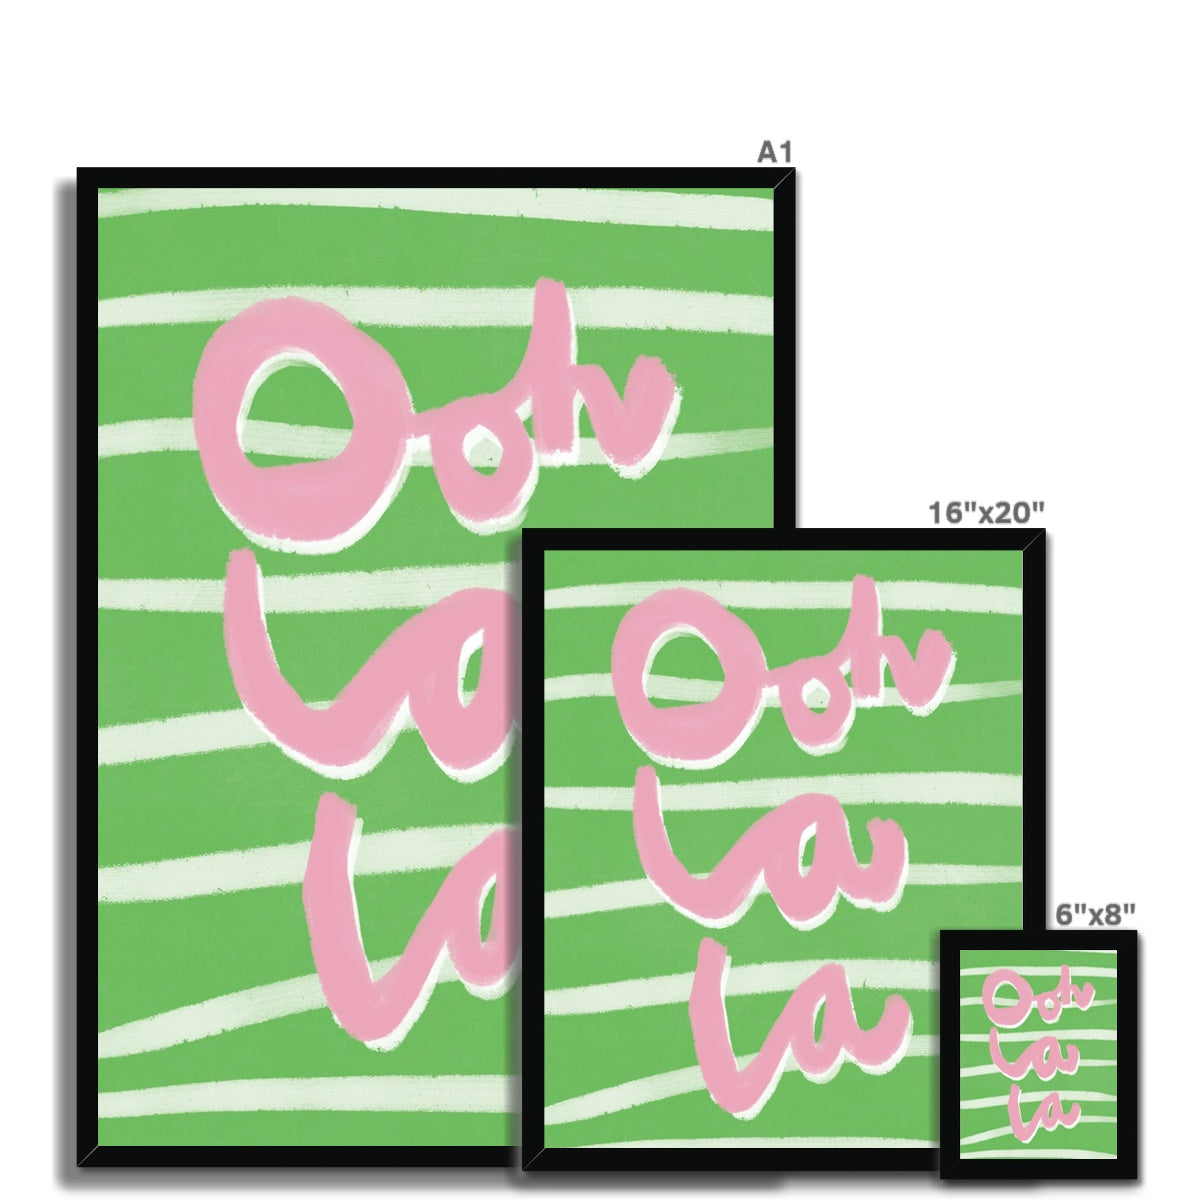 Ooh La La Art Print - Green, White and Pink Framed Print